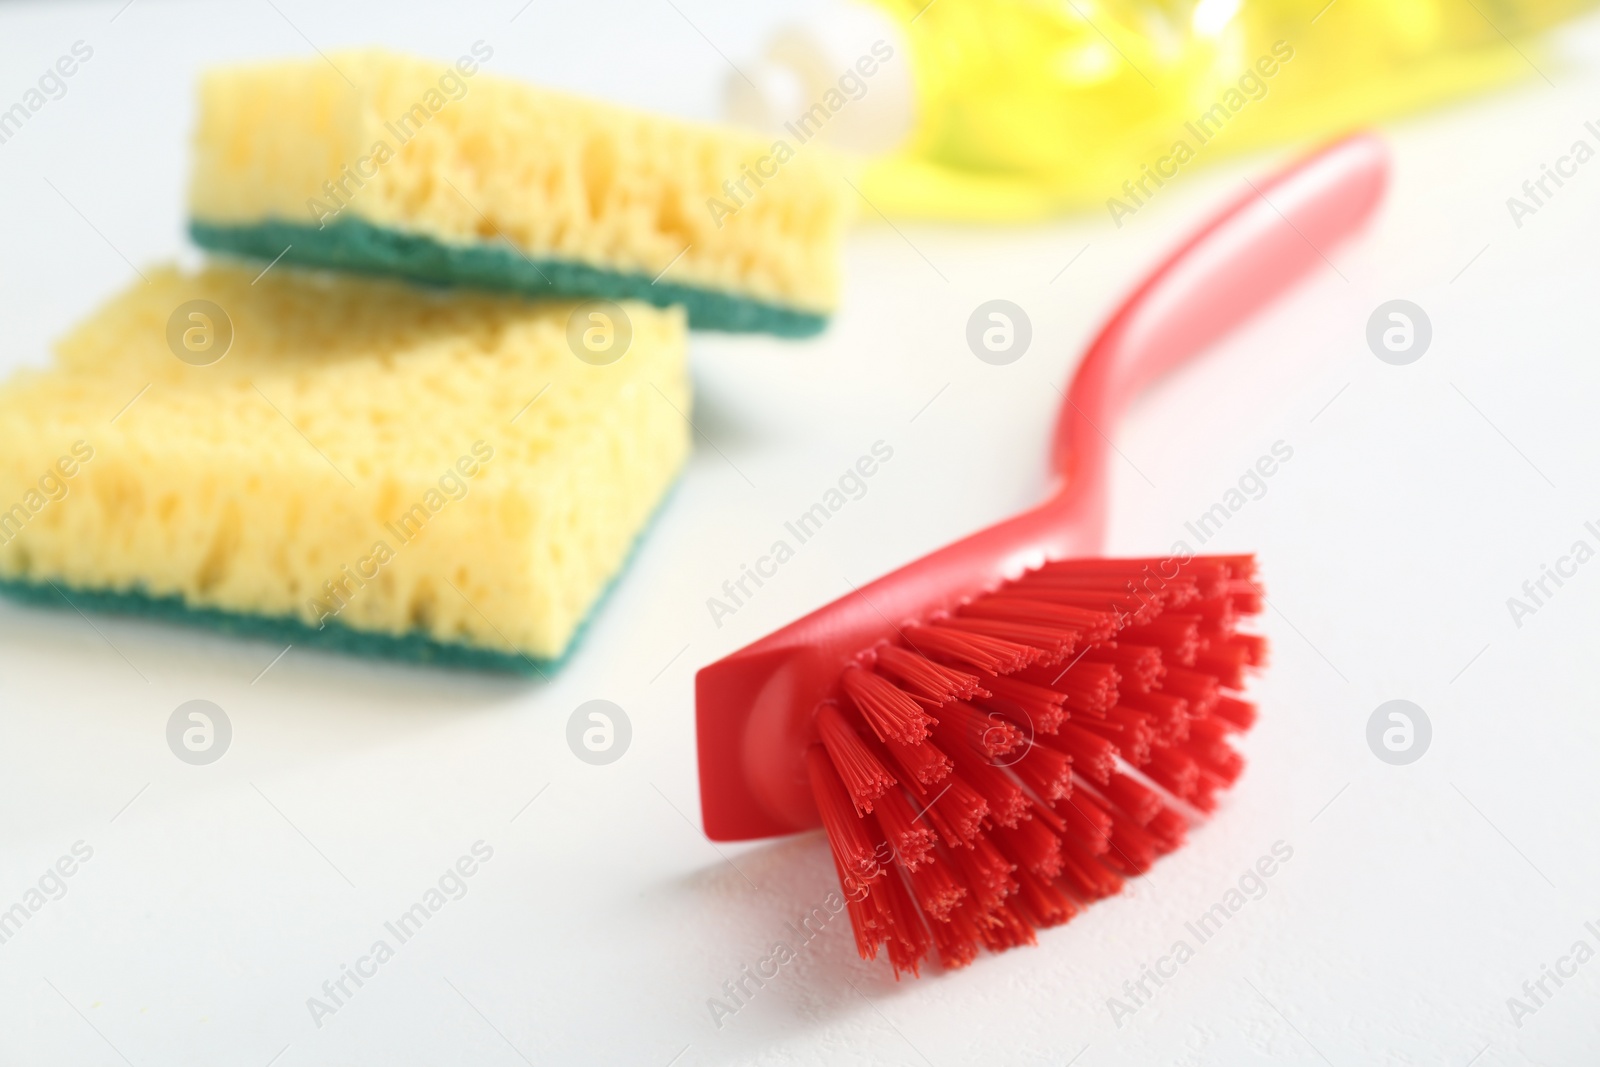 Photo of Cleaning brush for dish washing on white background, closeup